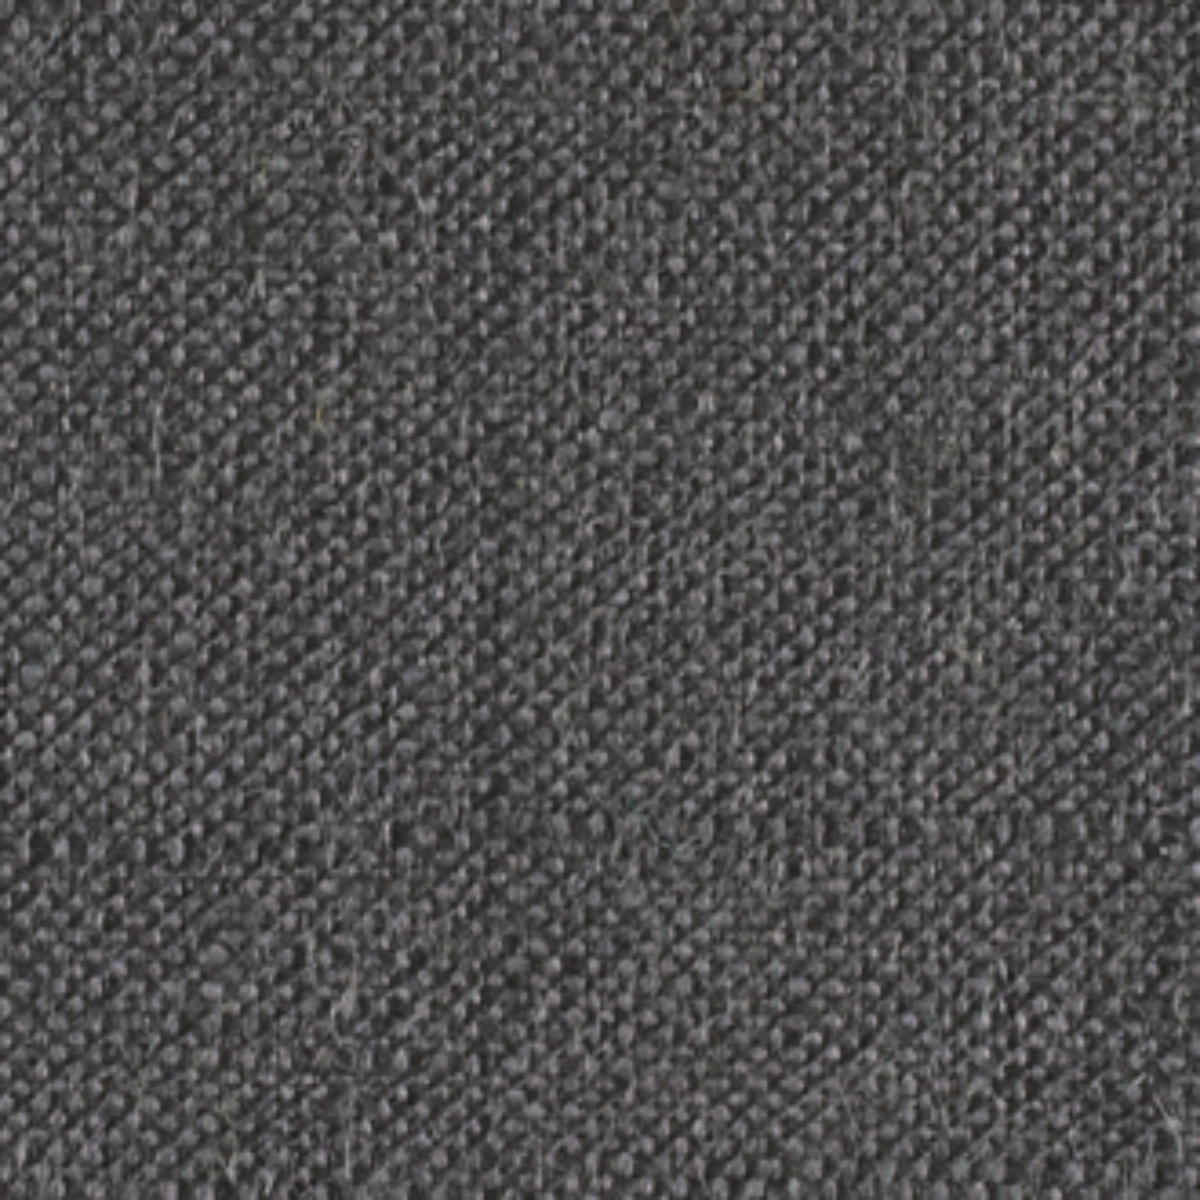 Swatch Sample of Smoke Grey Matouk Chelsea Linen Tissue Box Cover